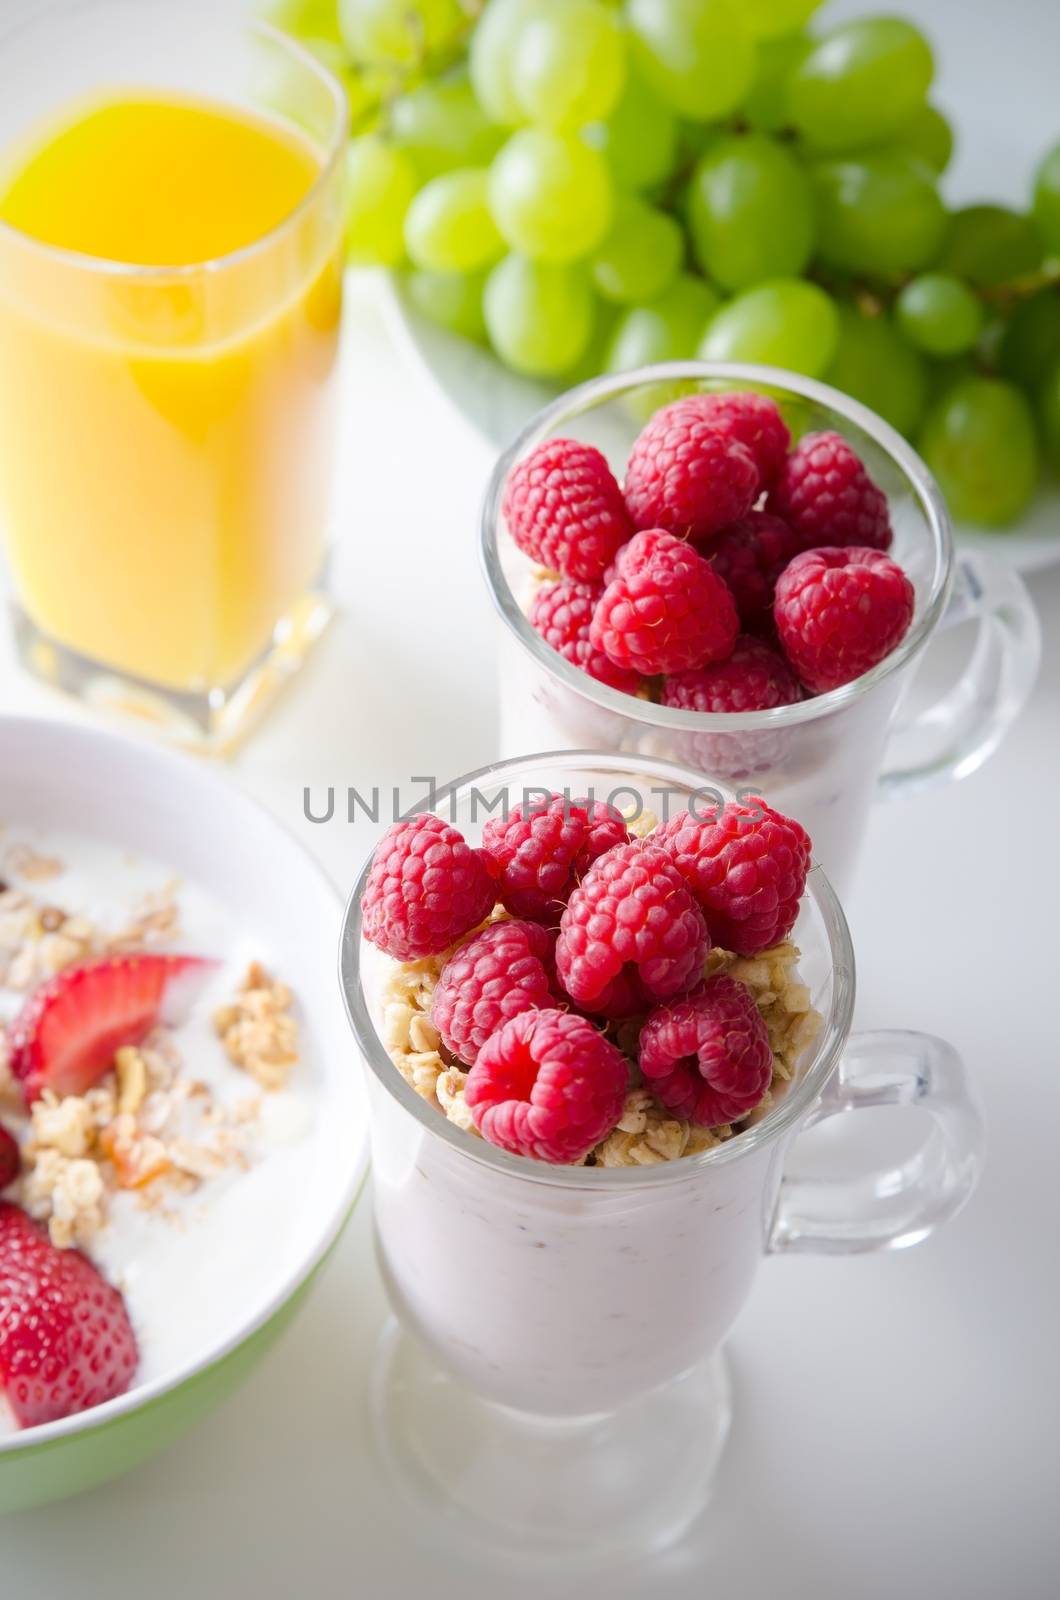 Glass of dessert with fresh berries, muesli and yoghurt by simpson33